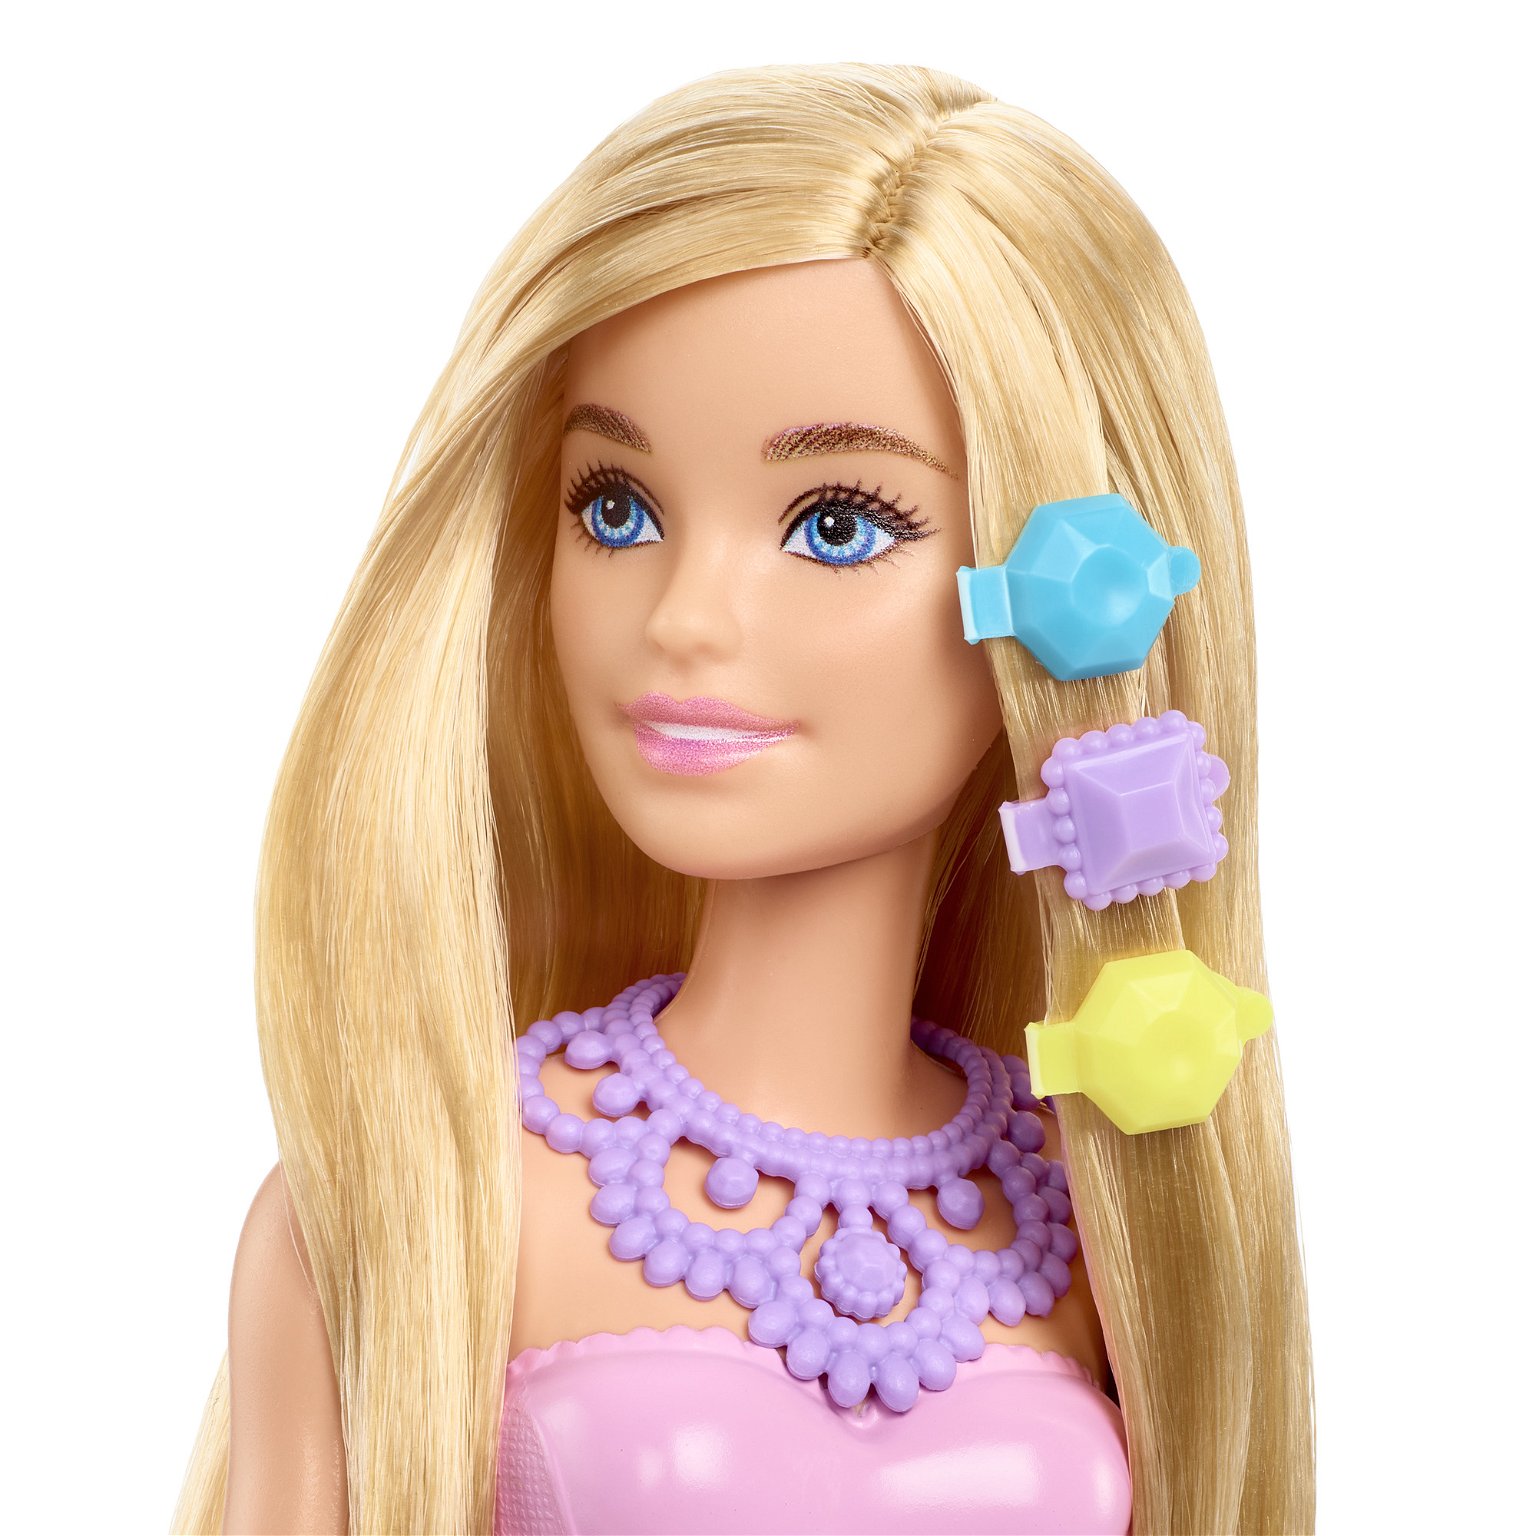 Barbie Dreamtopia advento kalendorius - 7